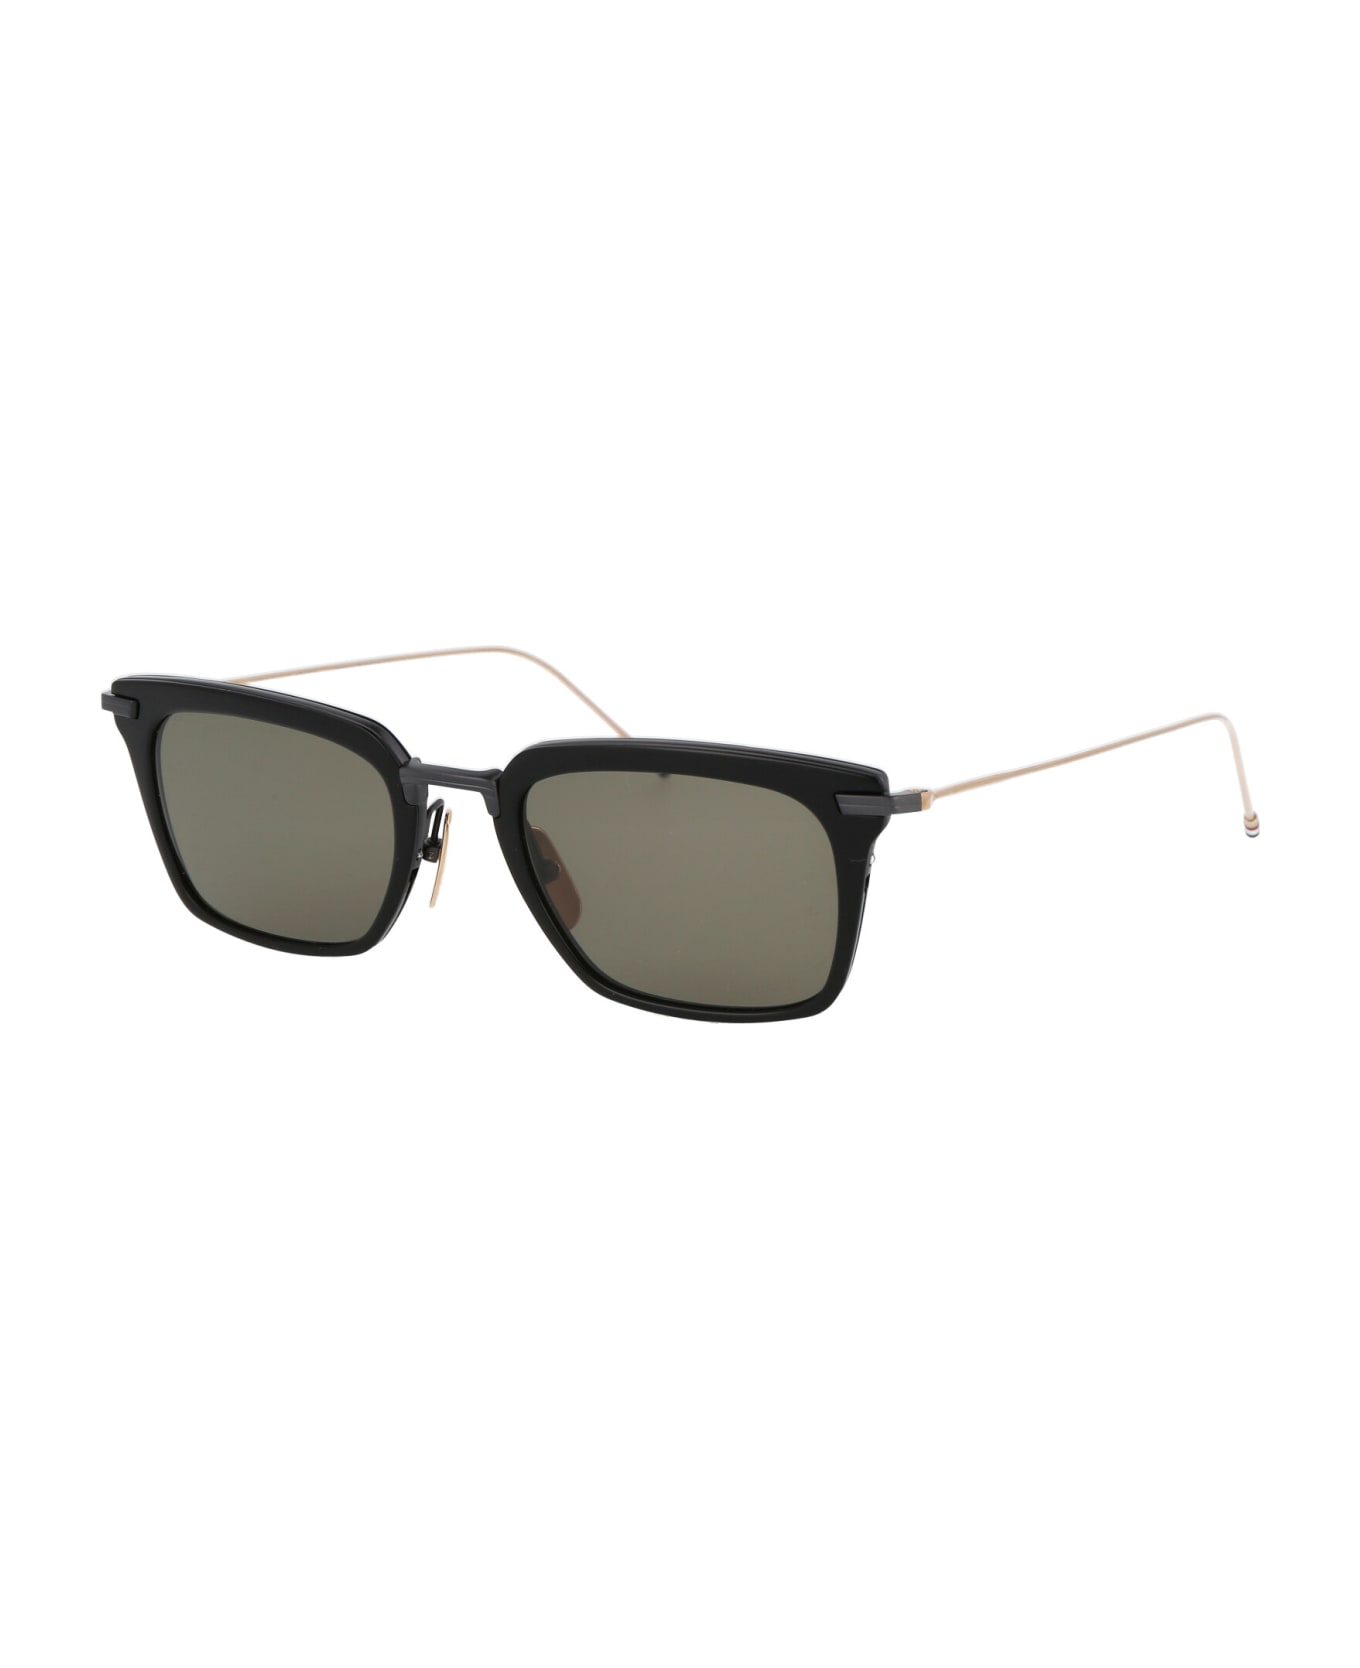 Thom Browne Tb-916 Sunglasses - 01 BLACK - BLACK IRON - WHITE GOLD TEMPLES W/ G-15